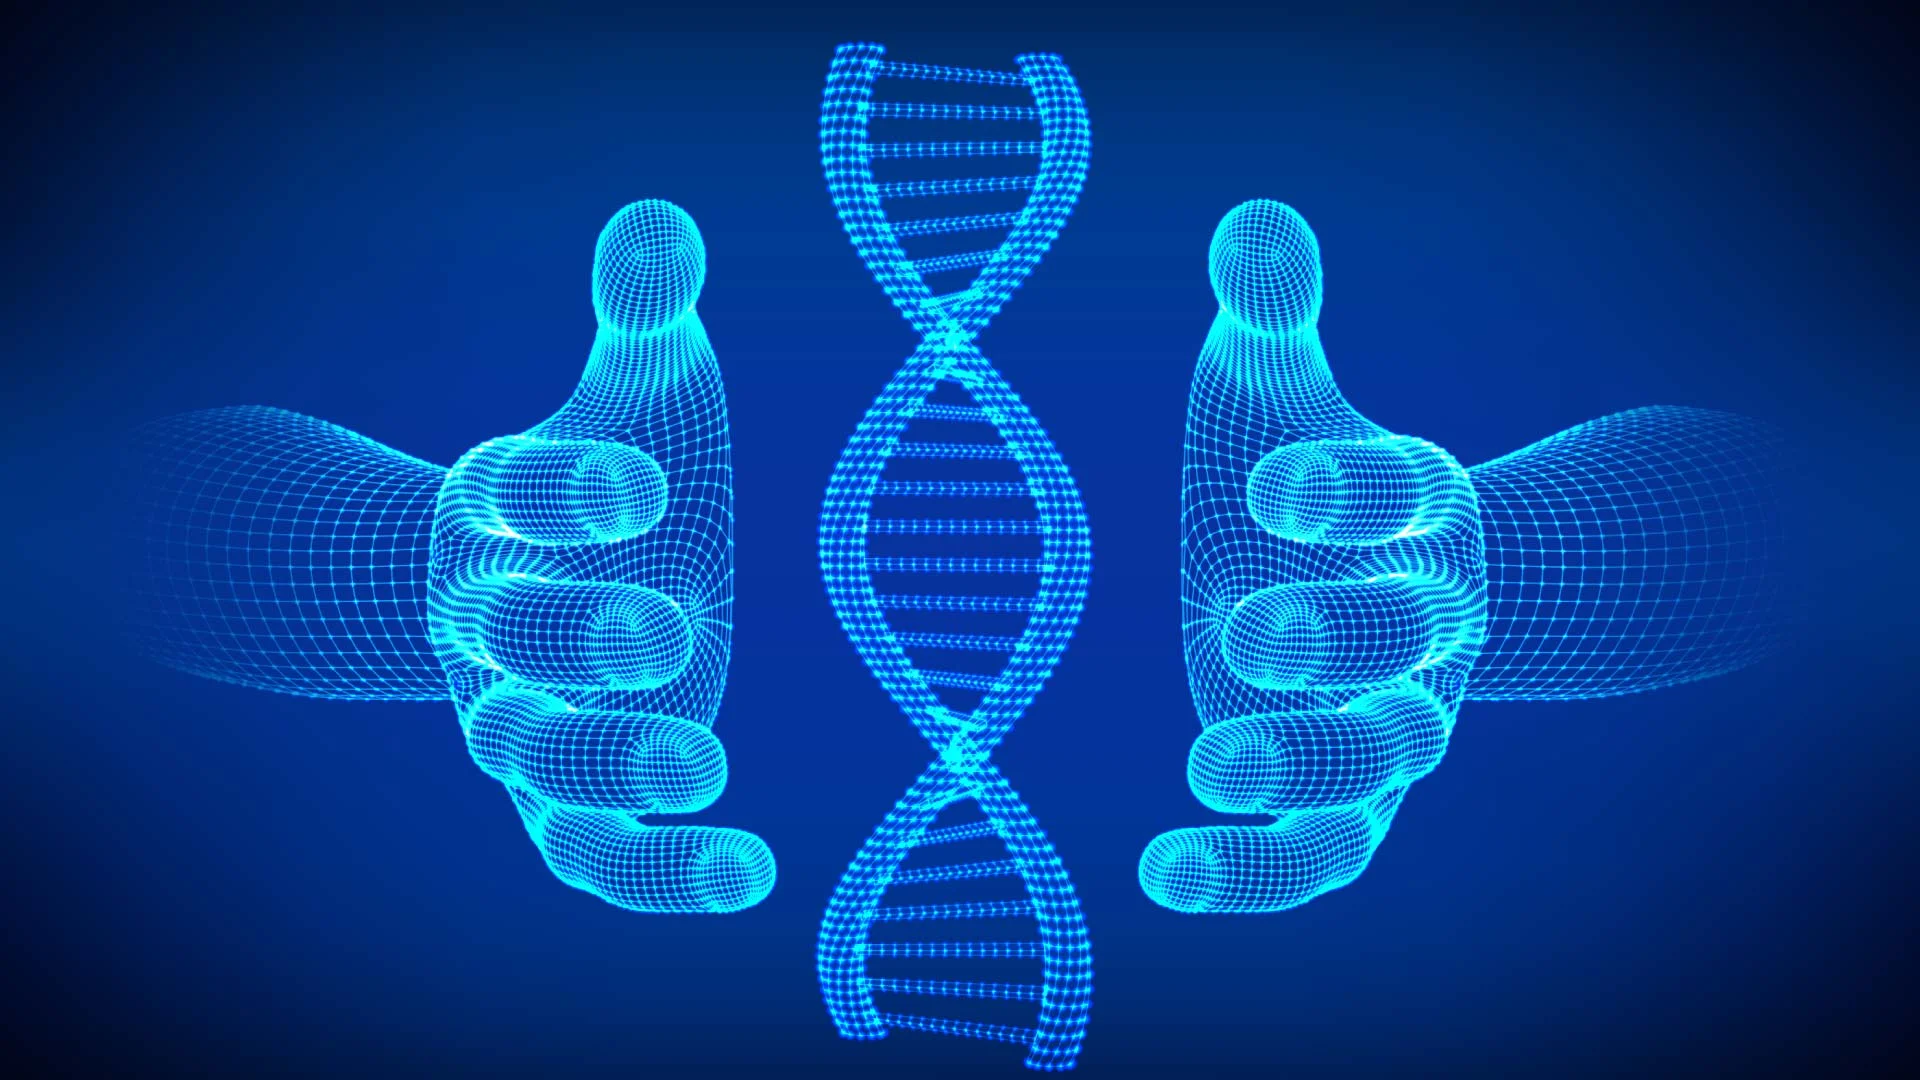 DeepMind's breakthrough AI to help predict Genetic Mutations